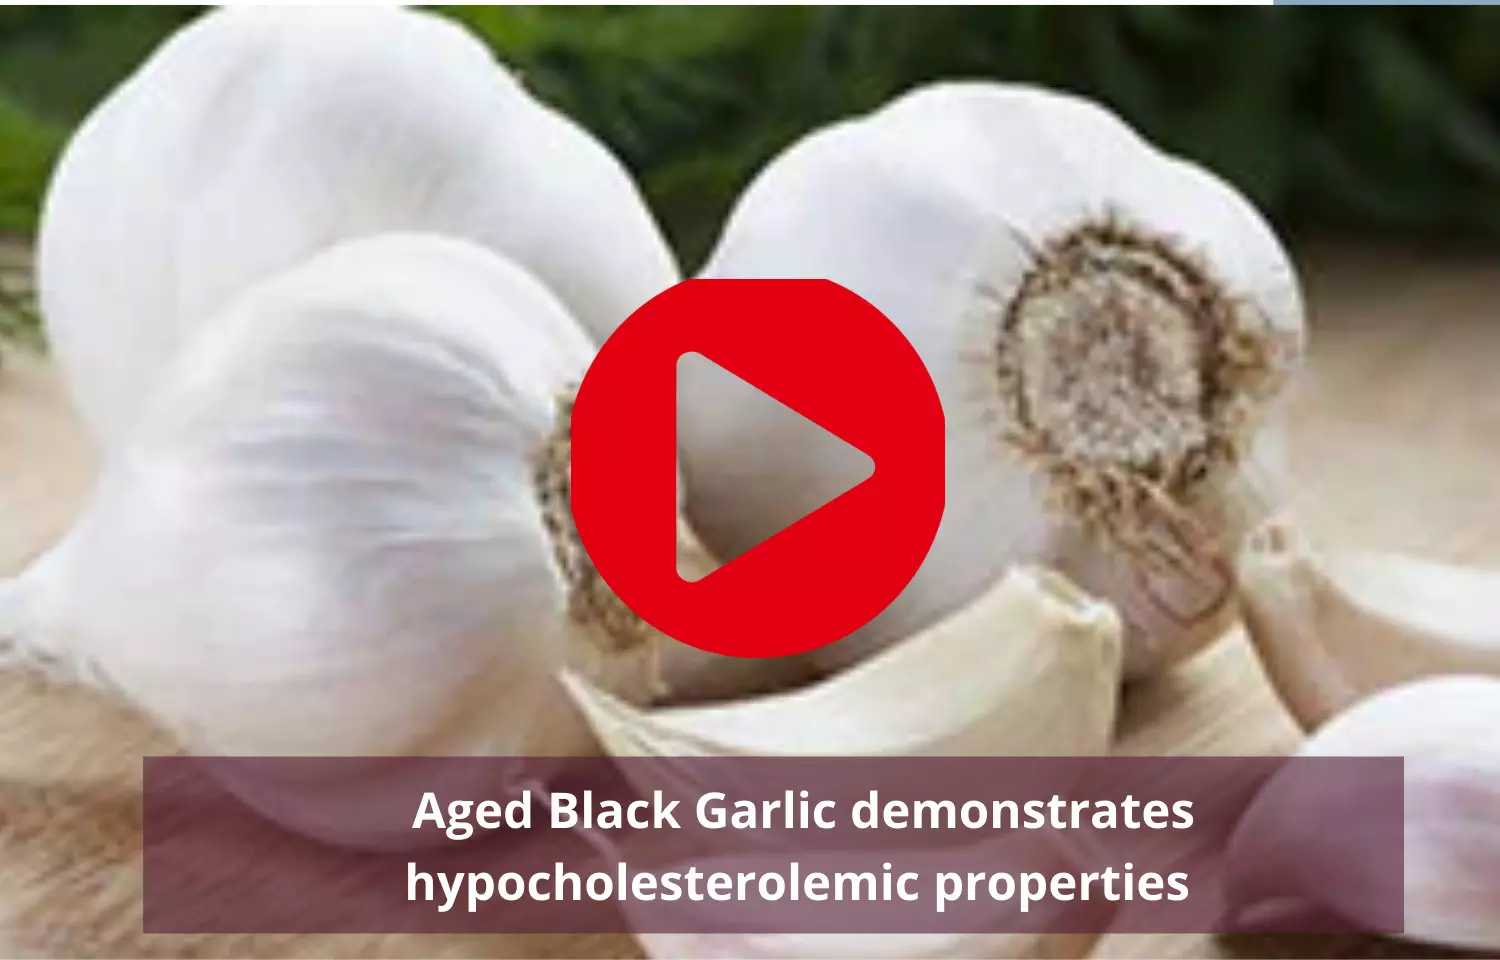 Journal Club -  Black Garlic demonstrates hypocholesterolemic properties when aged